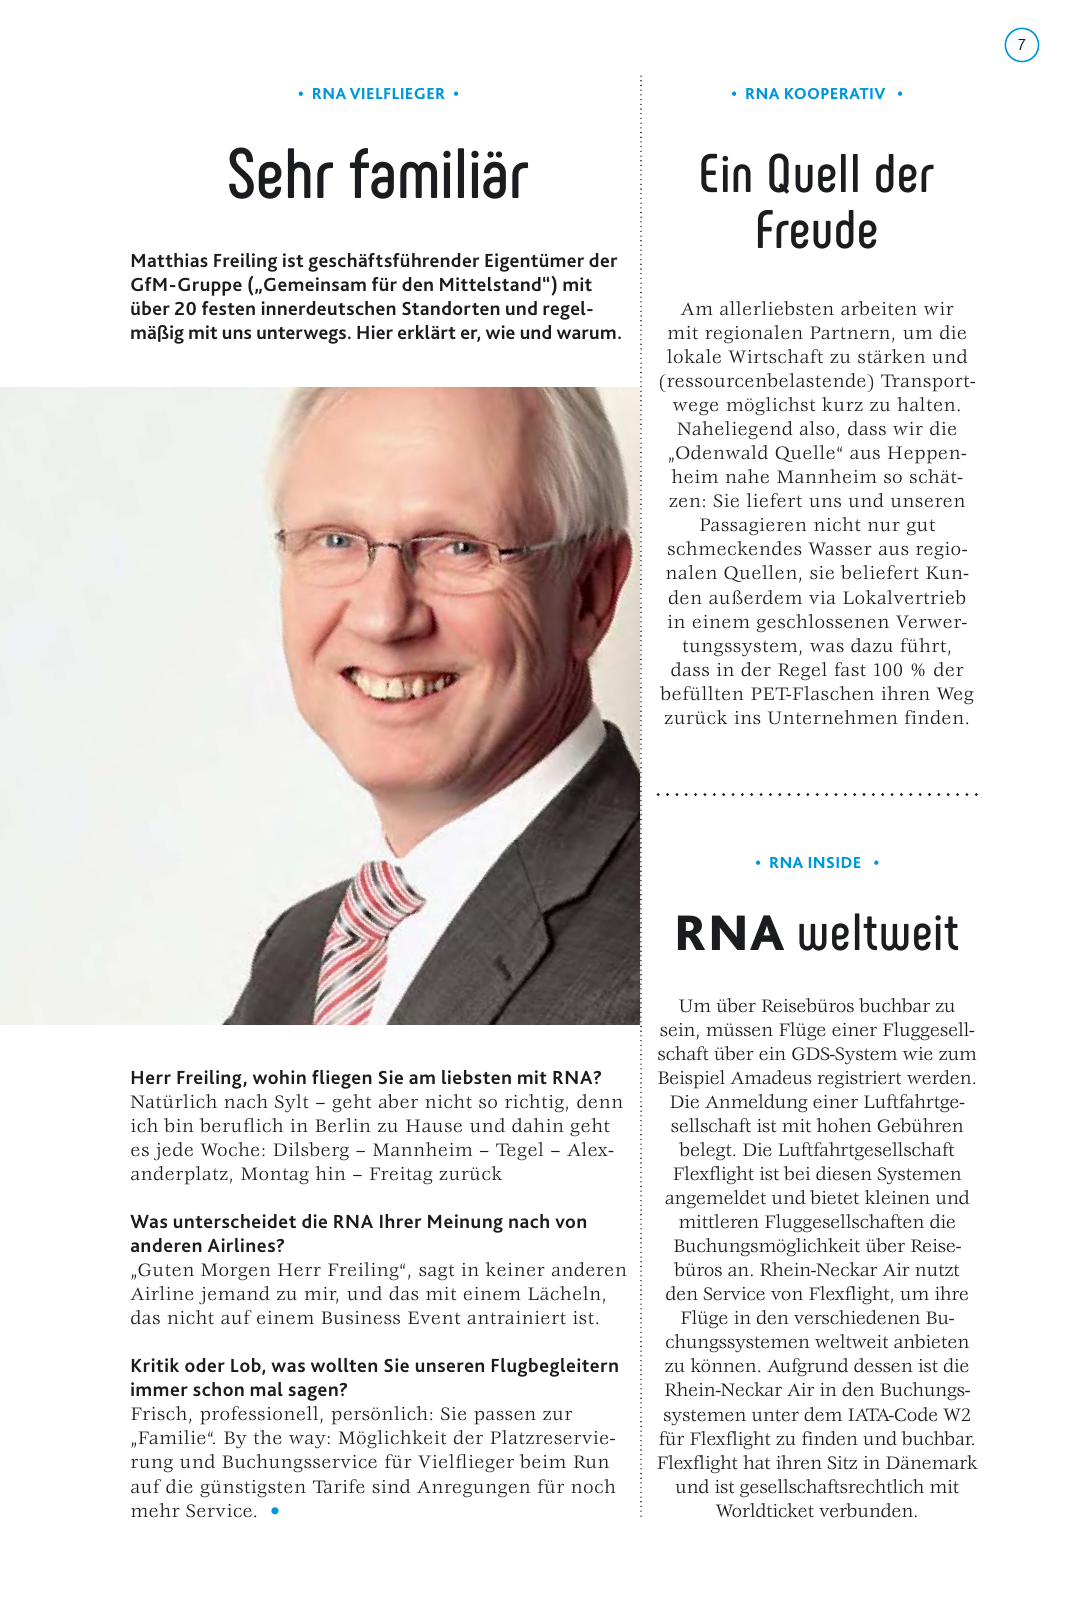 Vorschau RNA.inside 02/18 Seite 7